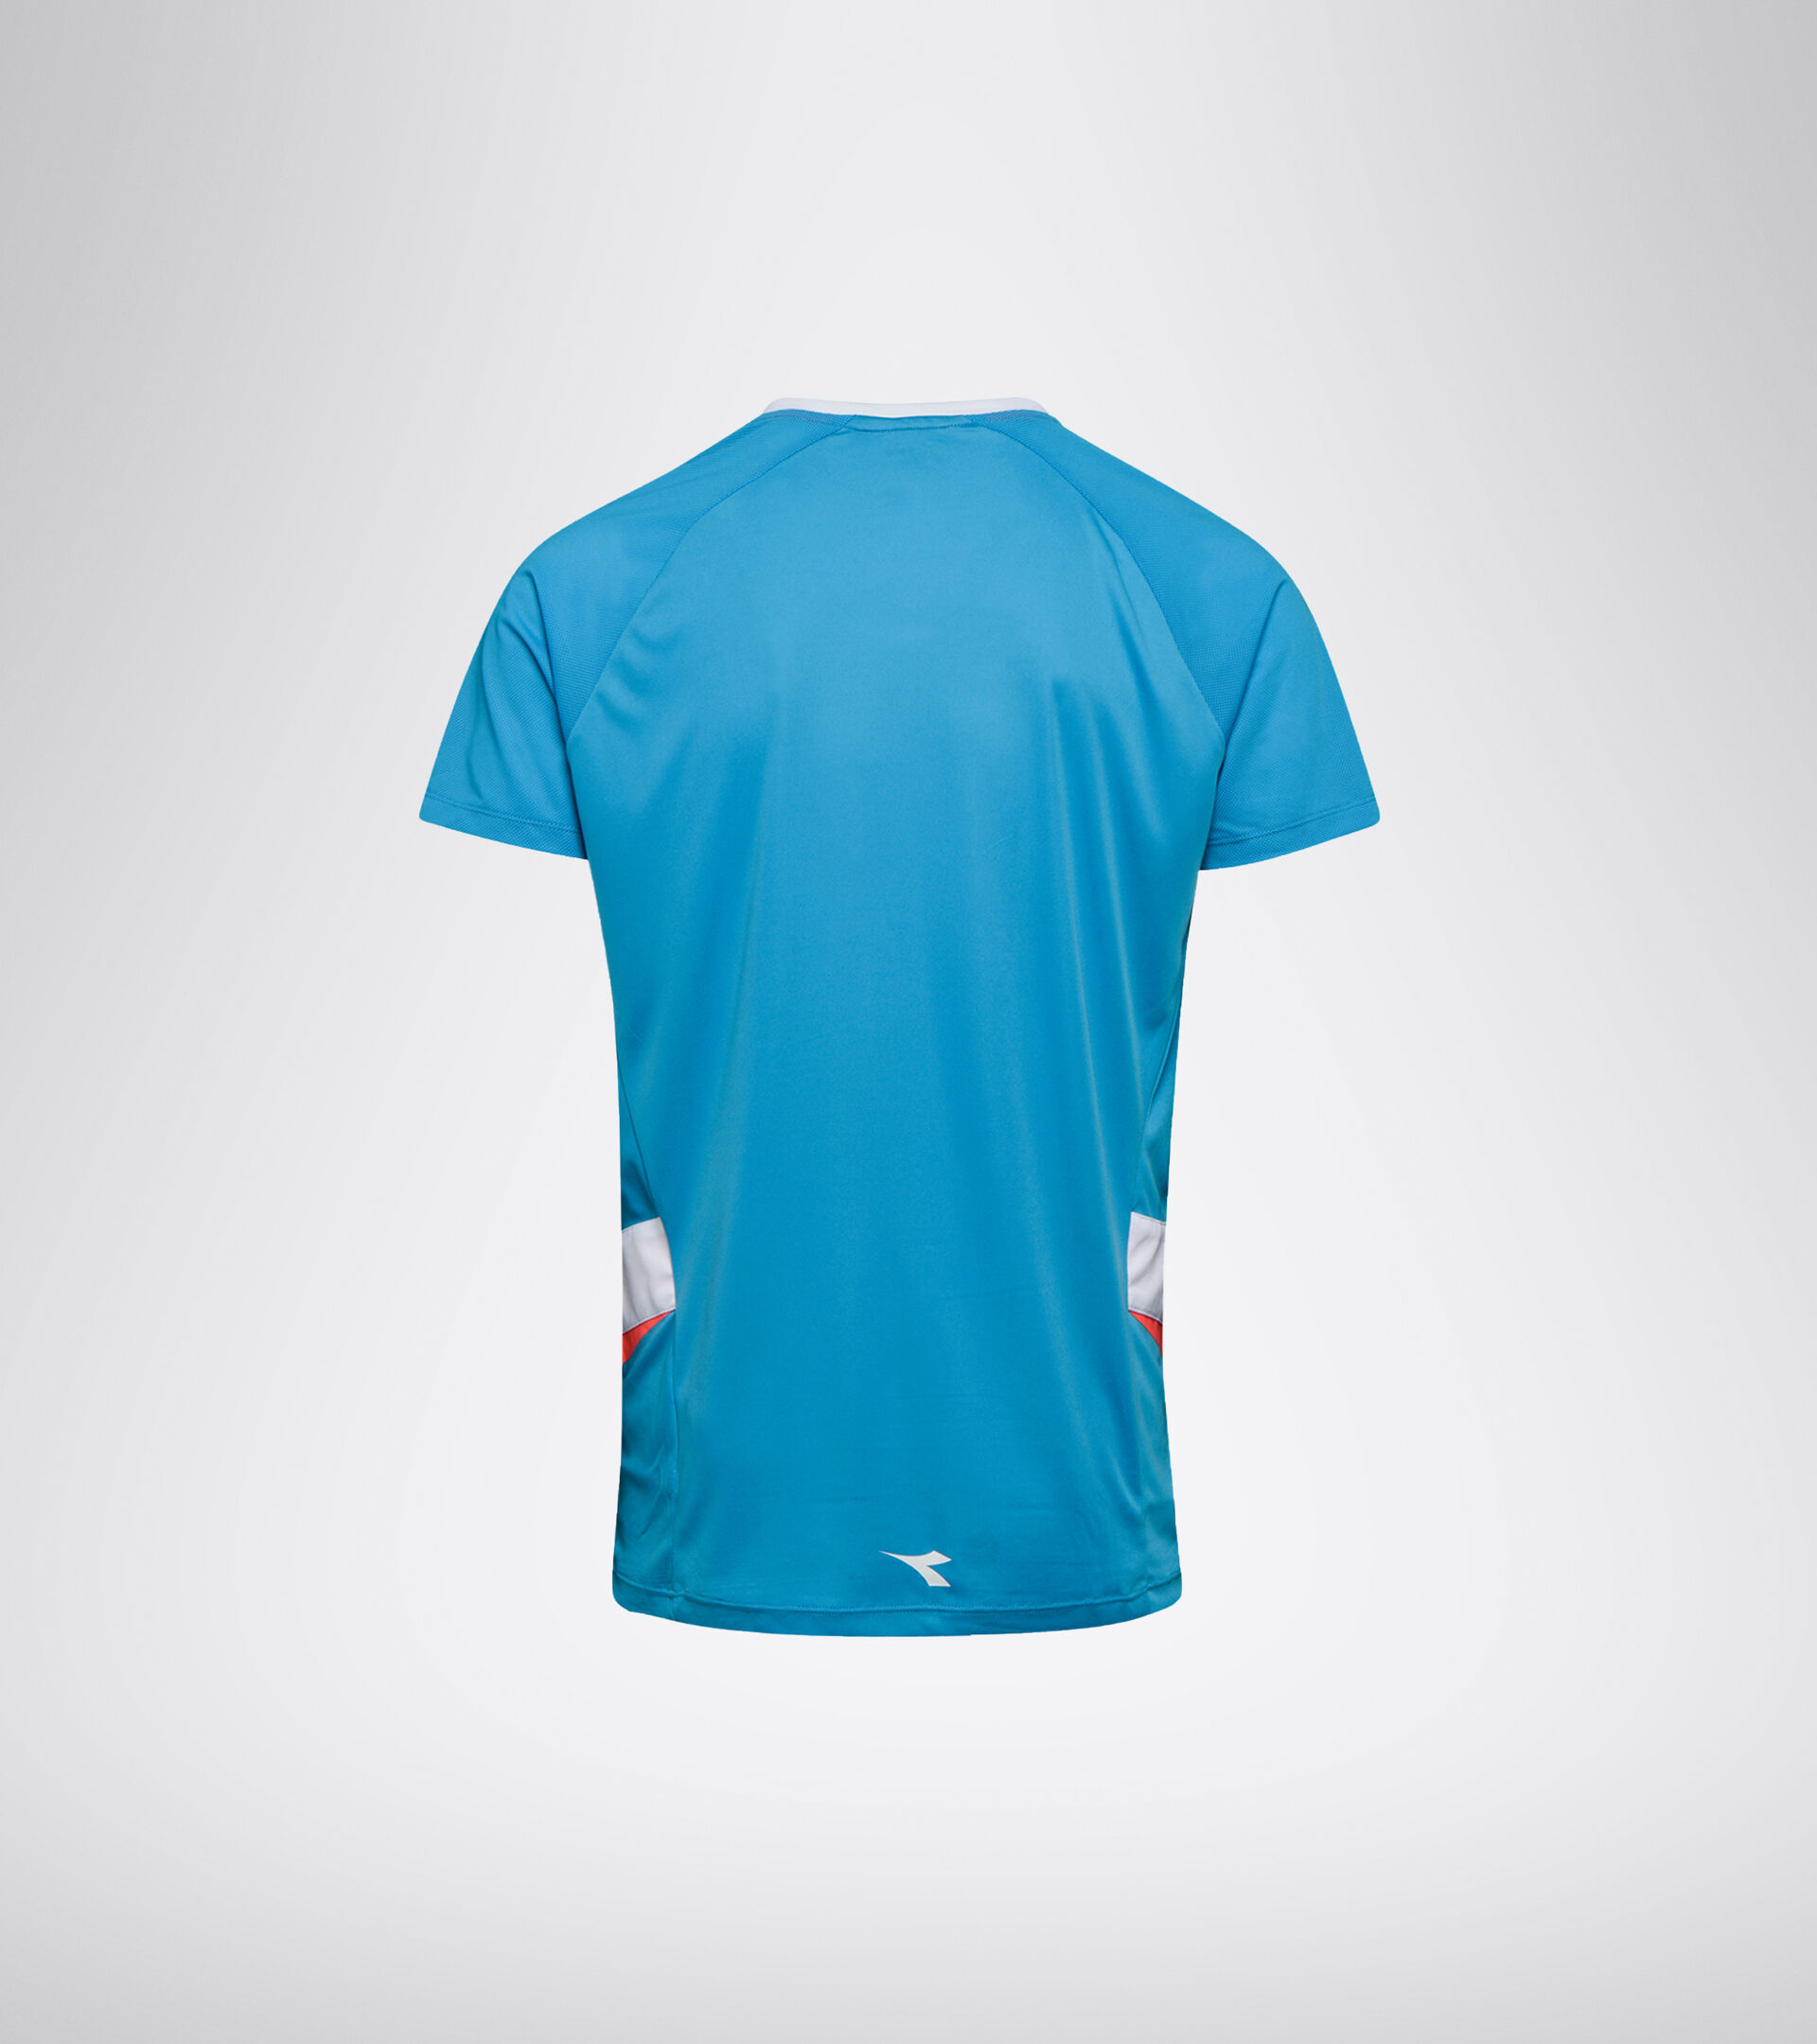 Camiseta de tenis - Hombre T-SHIRT AZUL TURQUESA BRILLANTE - Diadora